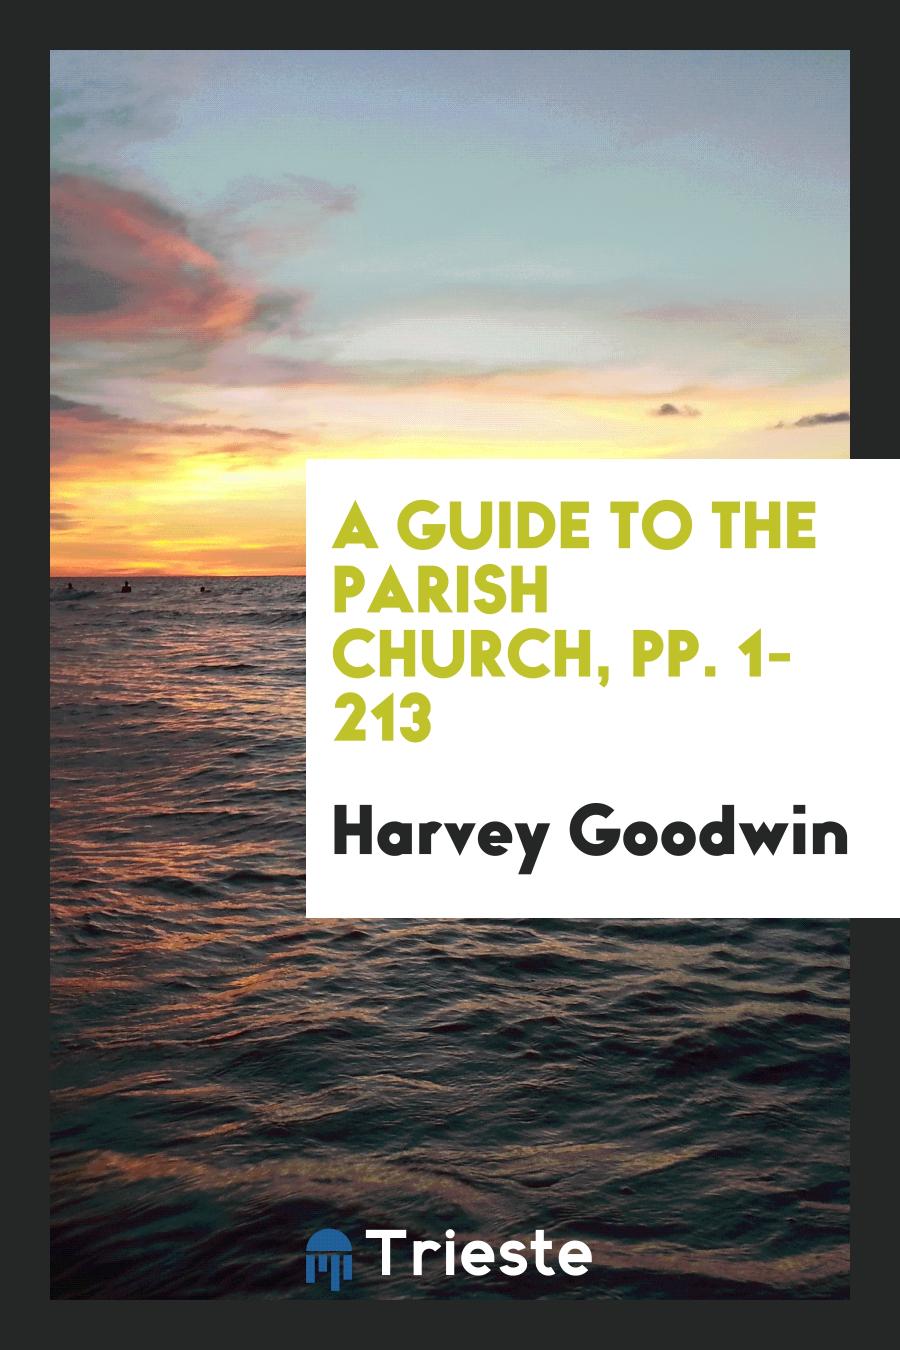 A Guide to the Parish Church, pp. 1-213